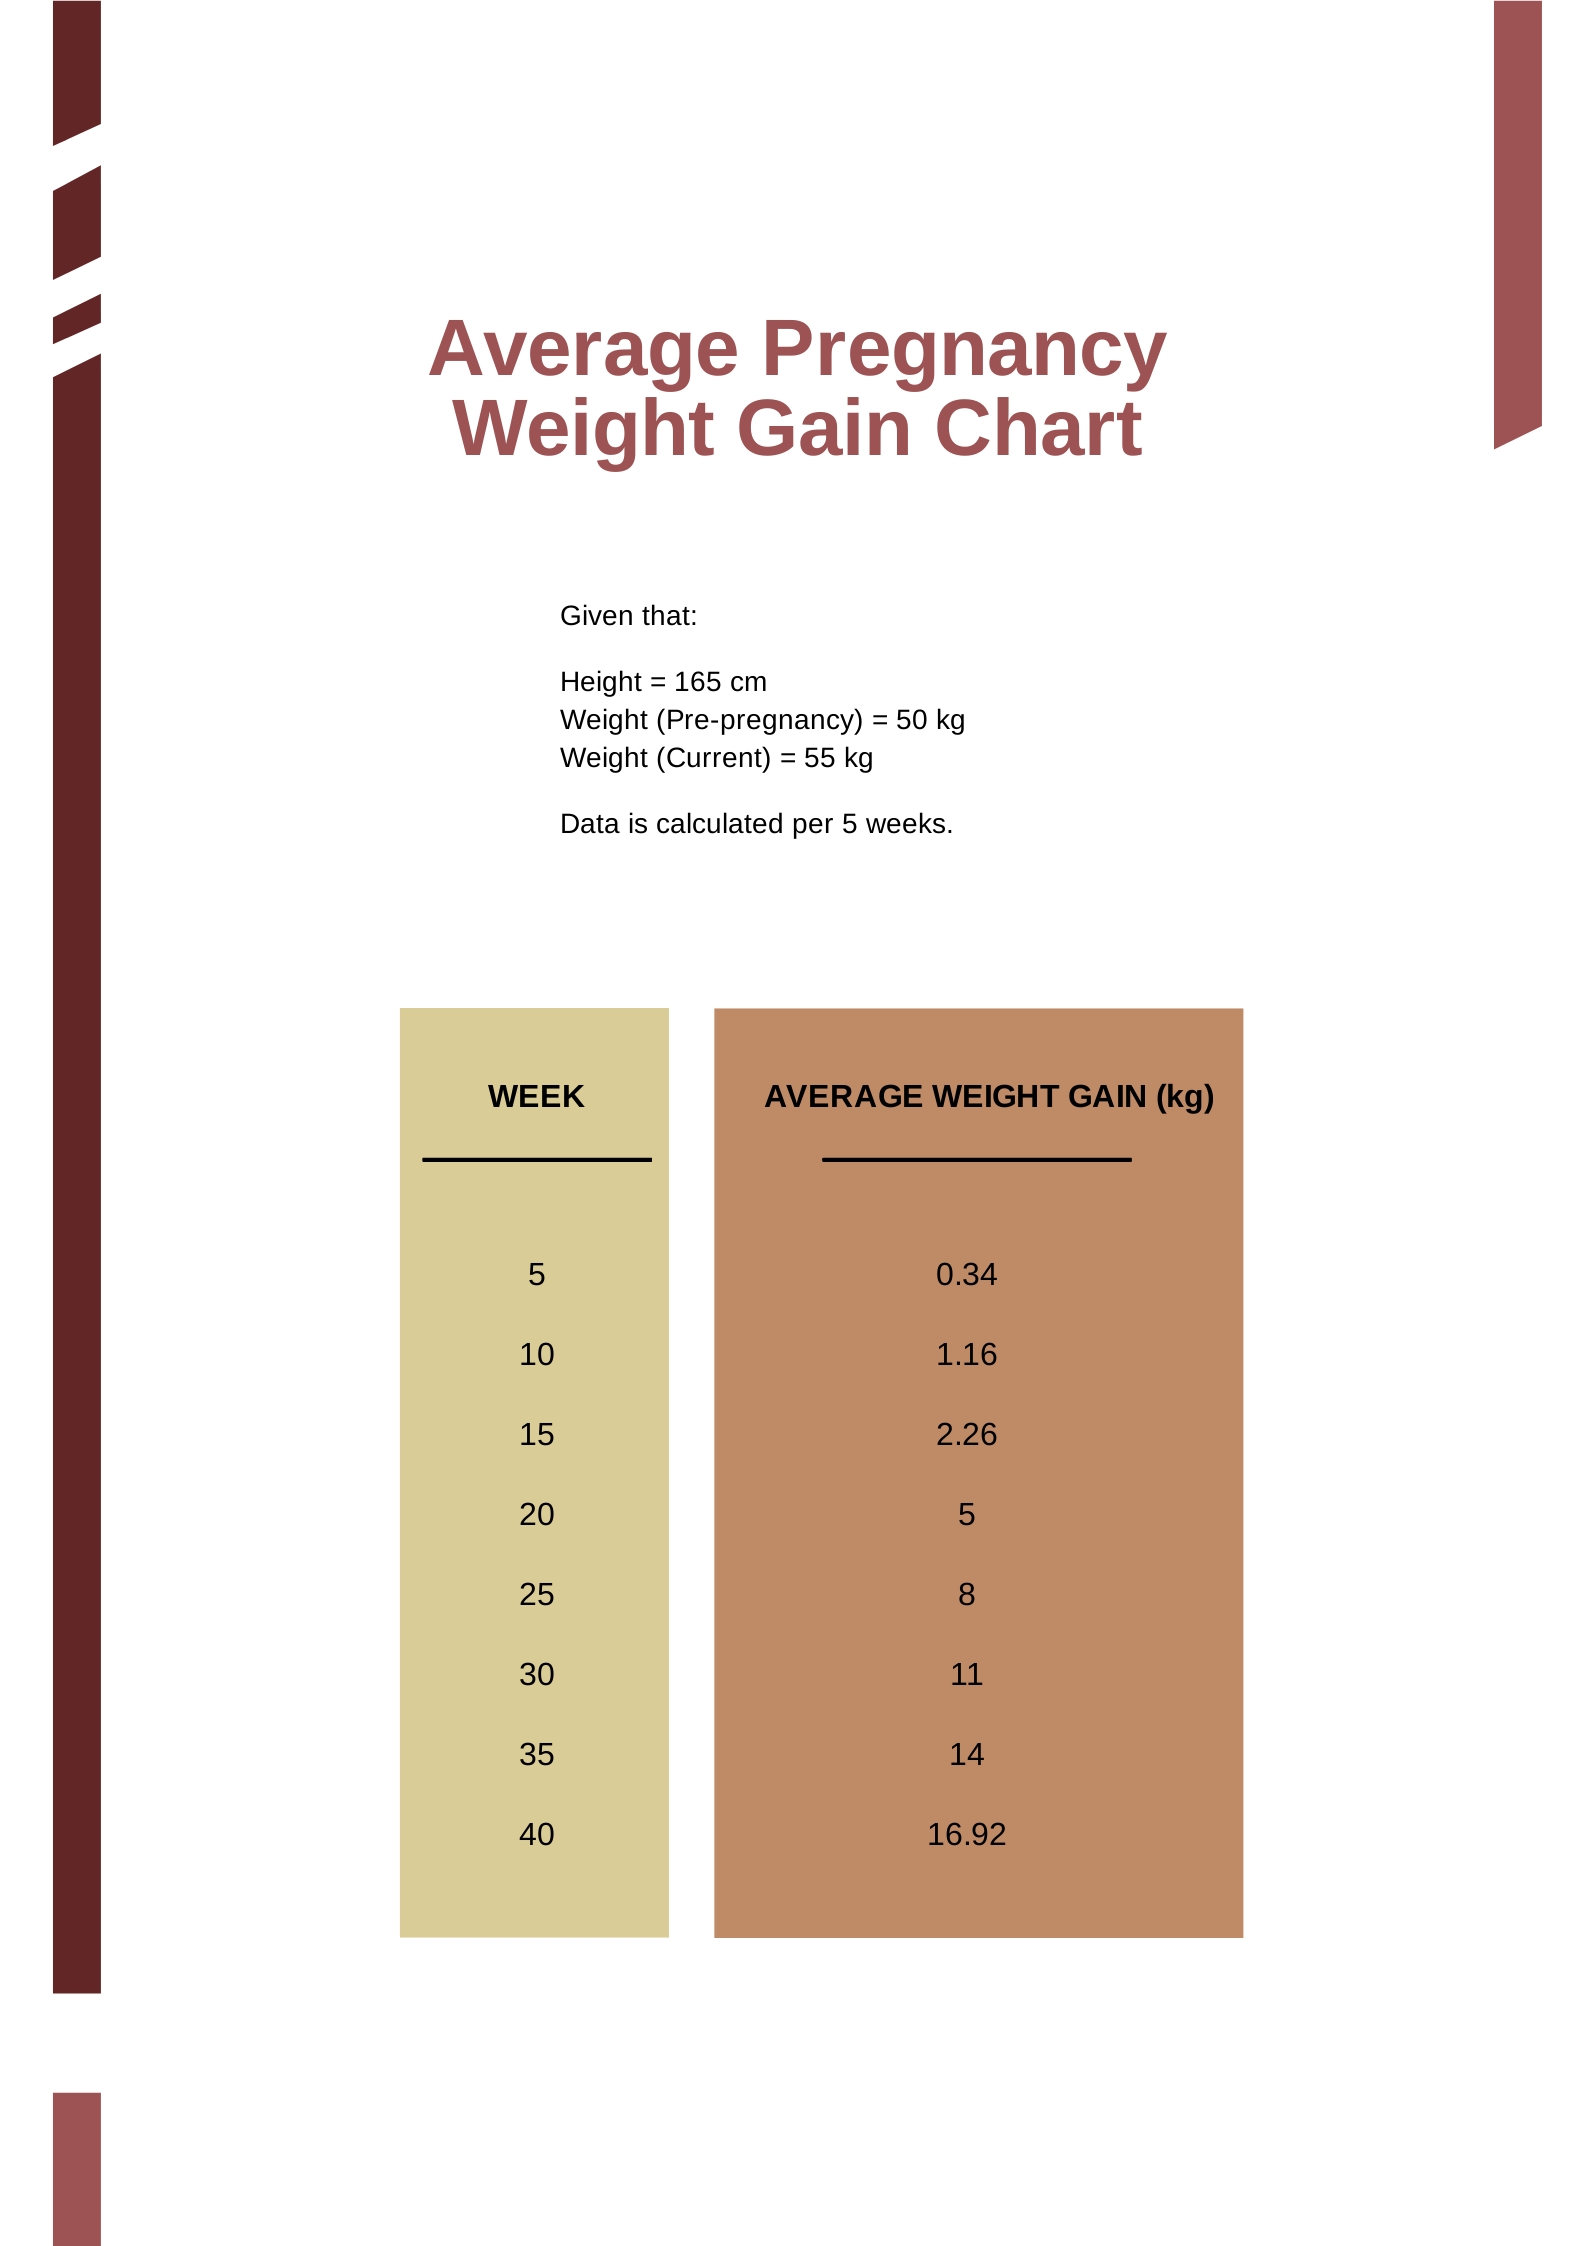 Average Pregnancy Weight Gain Chart in PDF